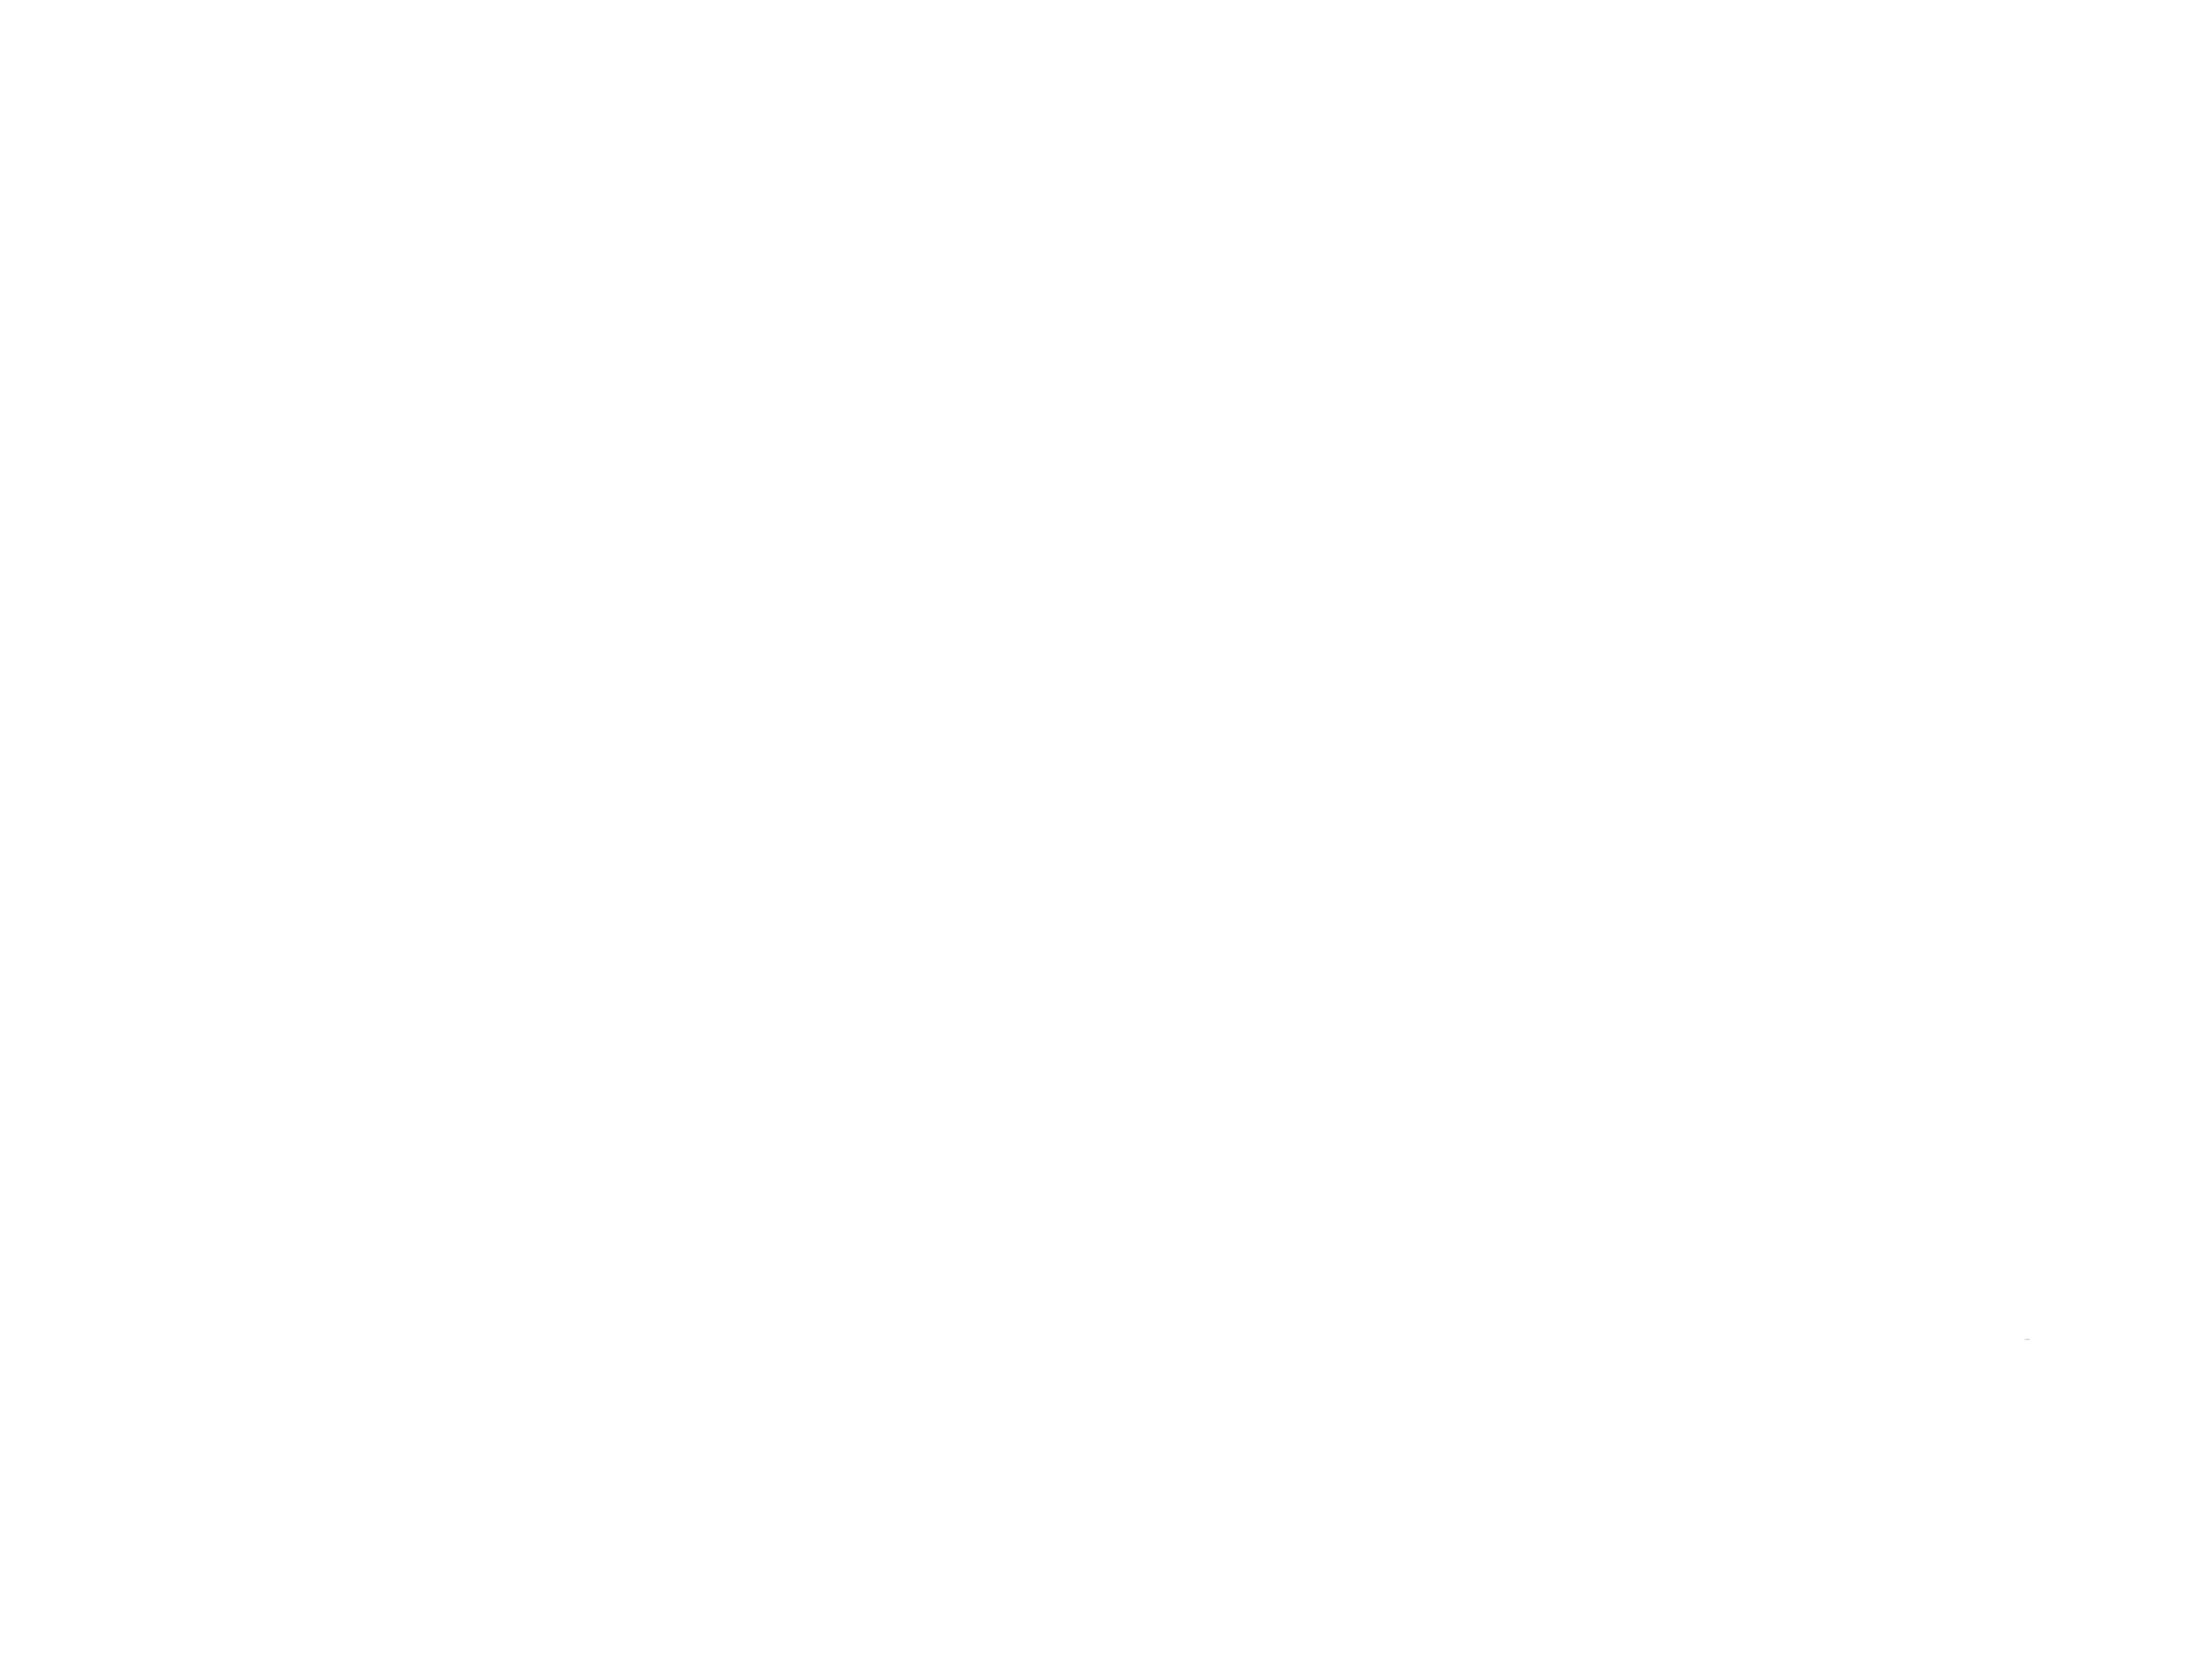 SWIFT SHORE CONSTRUCTION